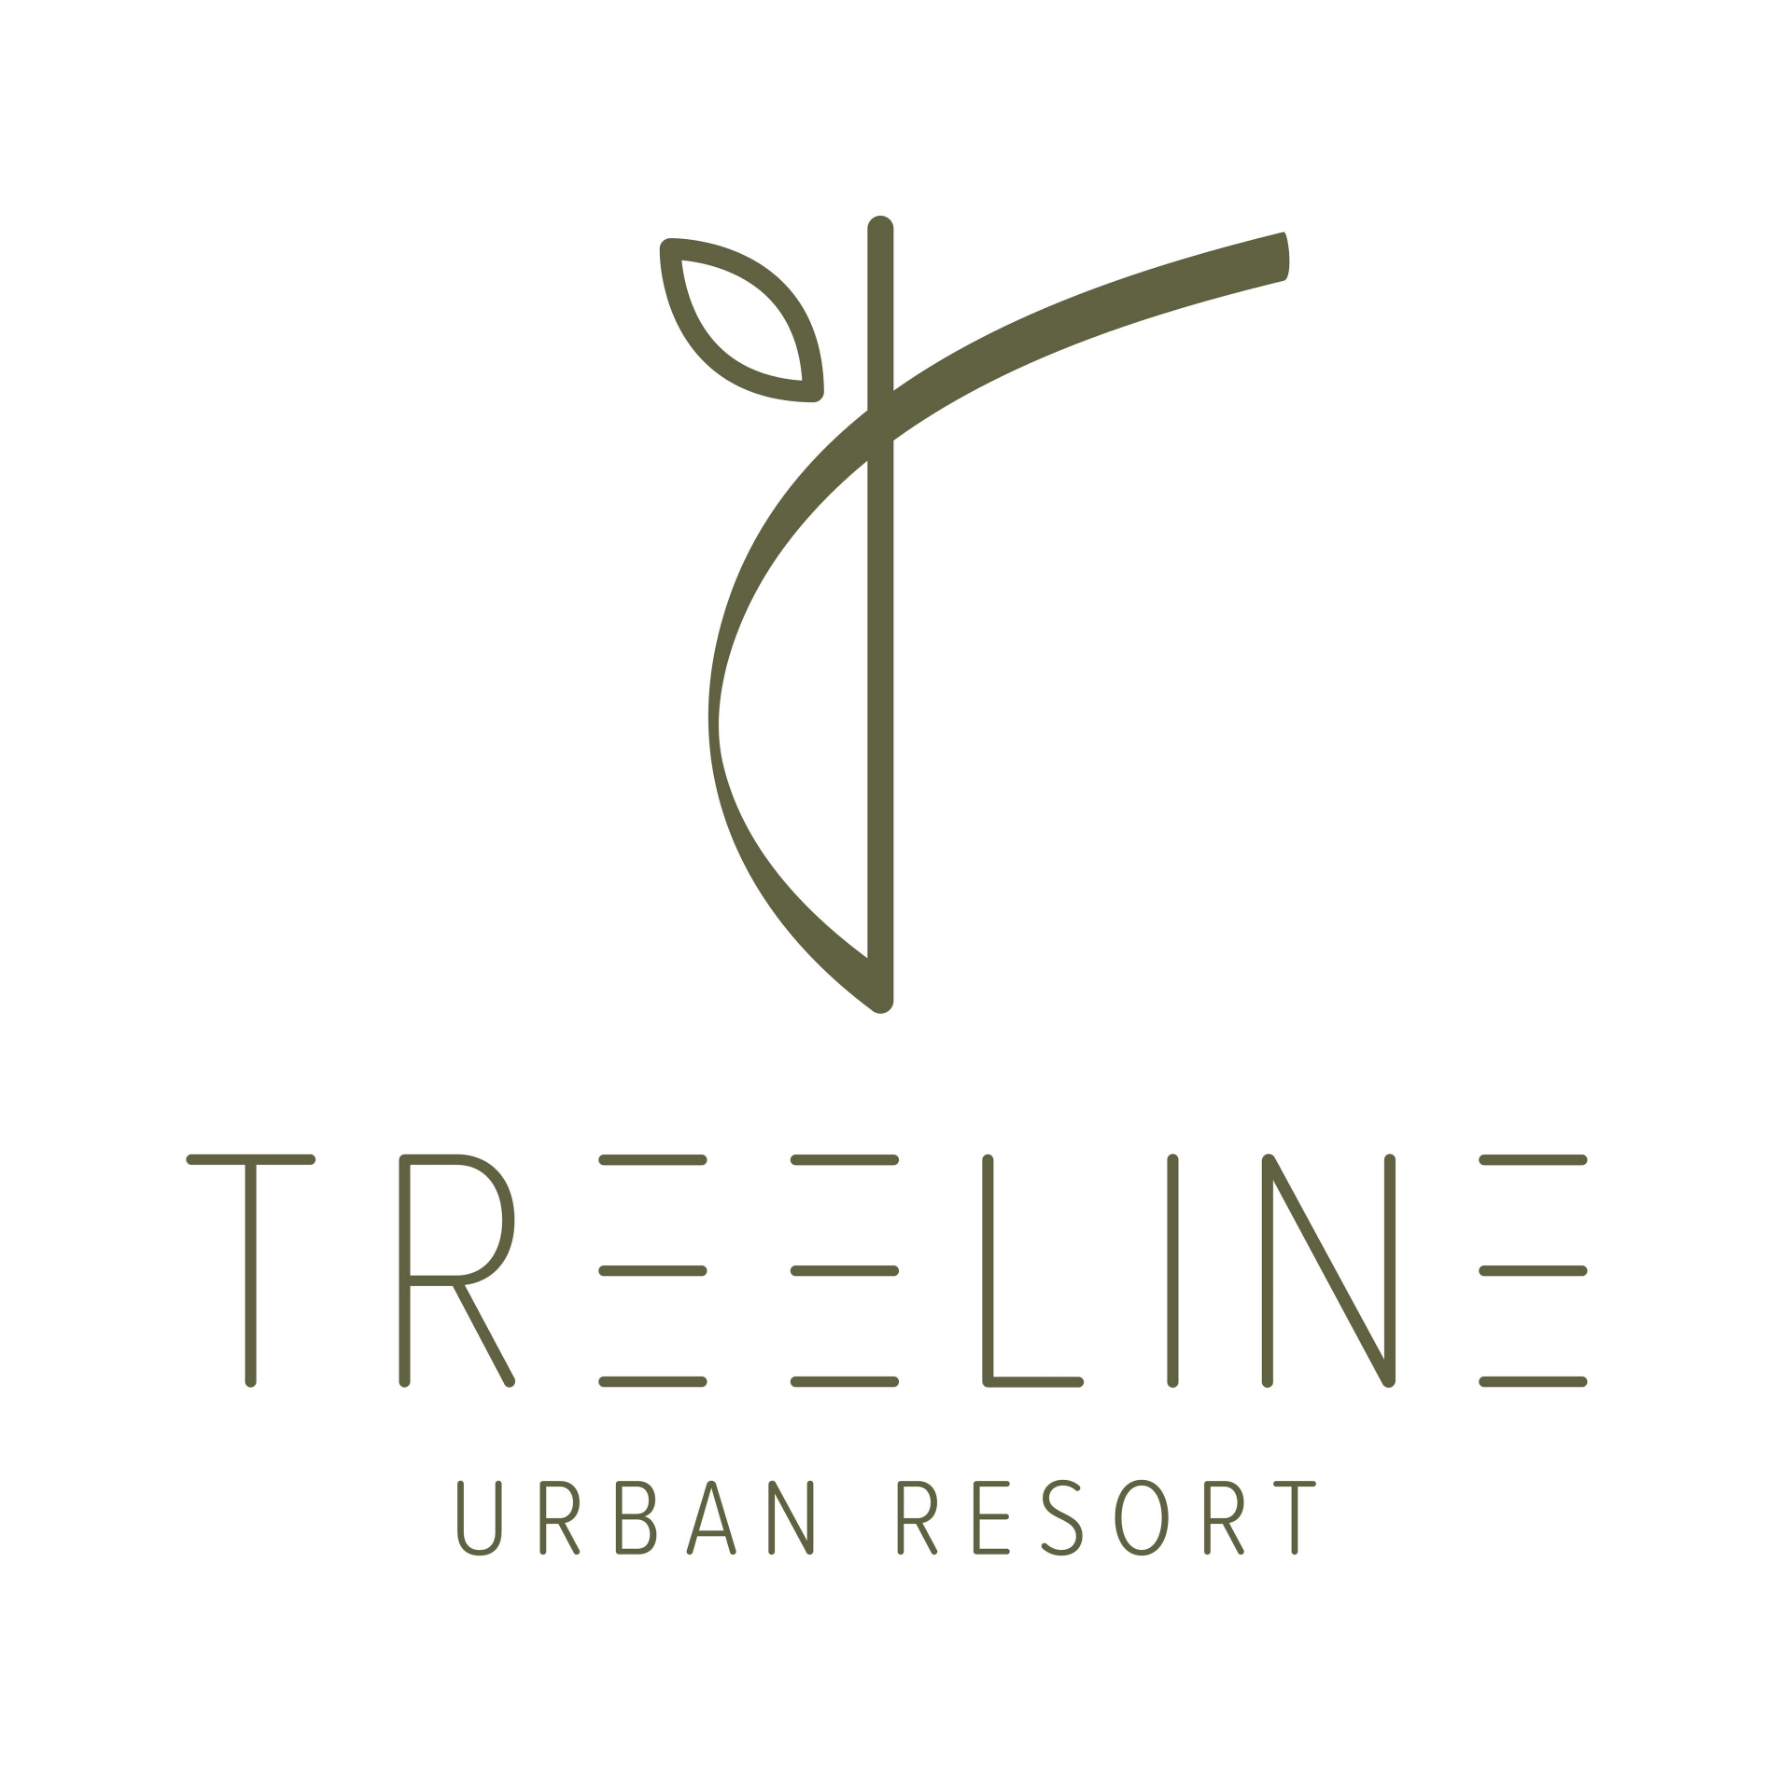 TREELINE logo (15 x 15 cm)